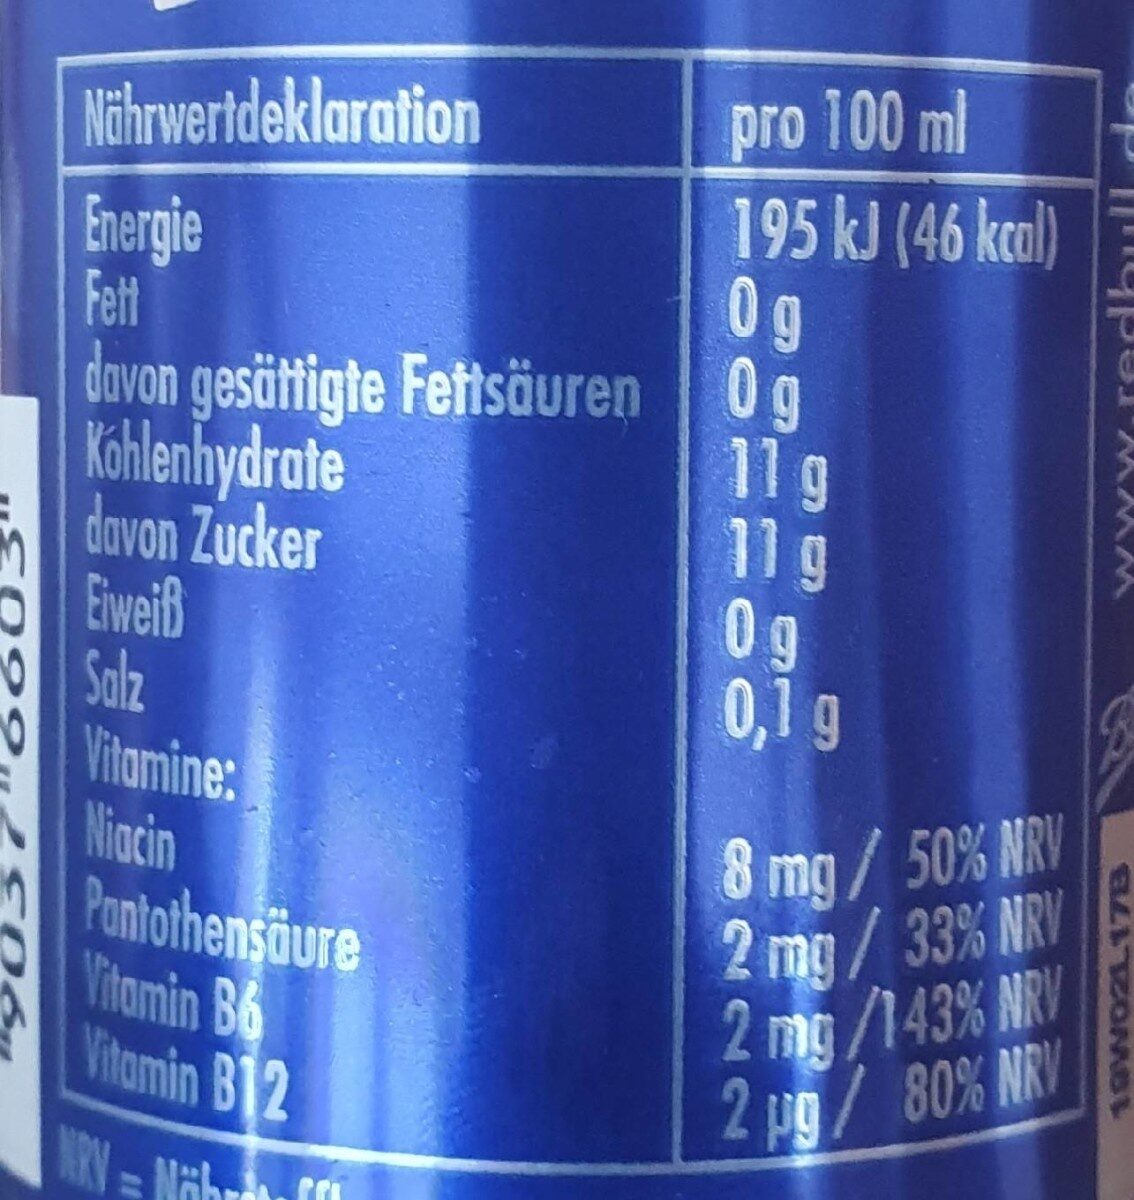 Red Bull Heidelbeere - Tableau nutritionnel